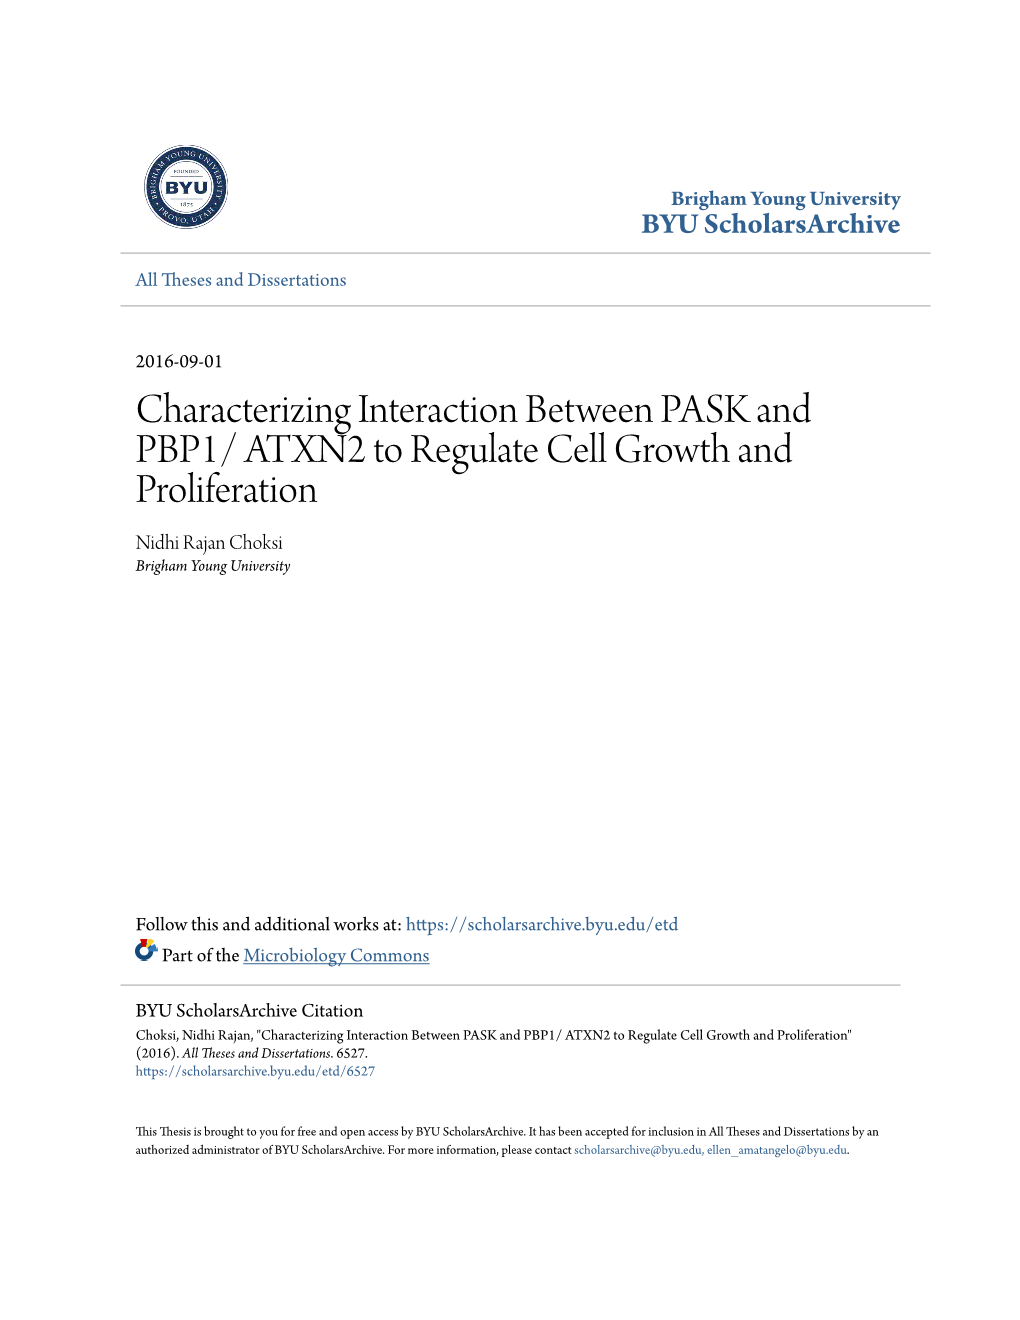 Characterizing Interaction Between PASK and PBP1/ ATXN2 to Regulate Cell Growth and Proliferation Nidhi Rajan Choksi Brigham Young University